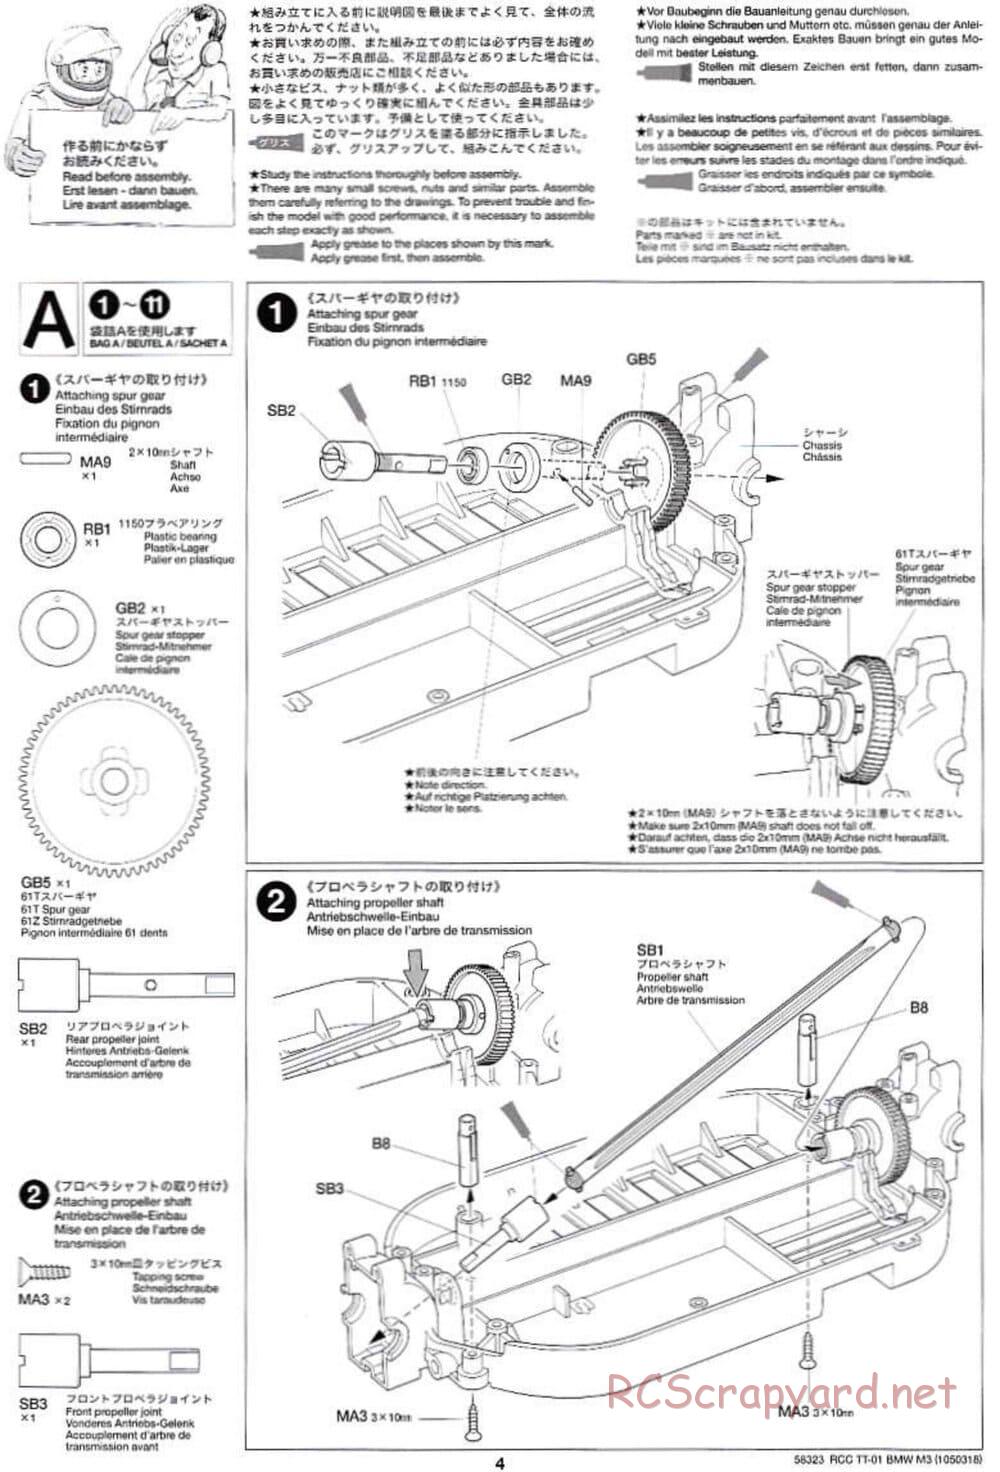 Tamiya - Schnitzer BMW M3 Sport Evo - TT-01 Chassis - Manual - Page 4